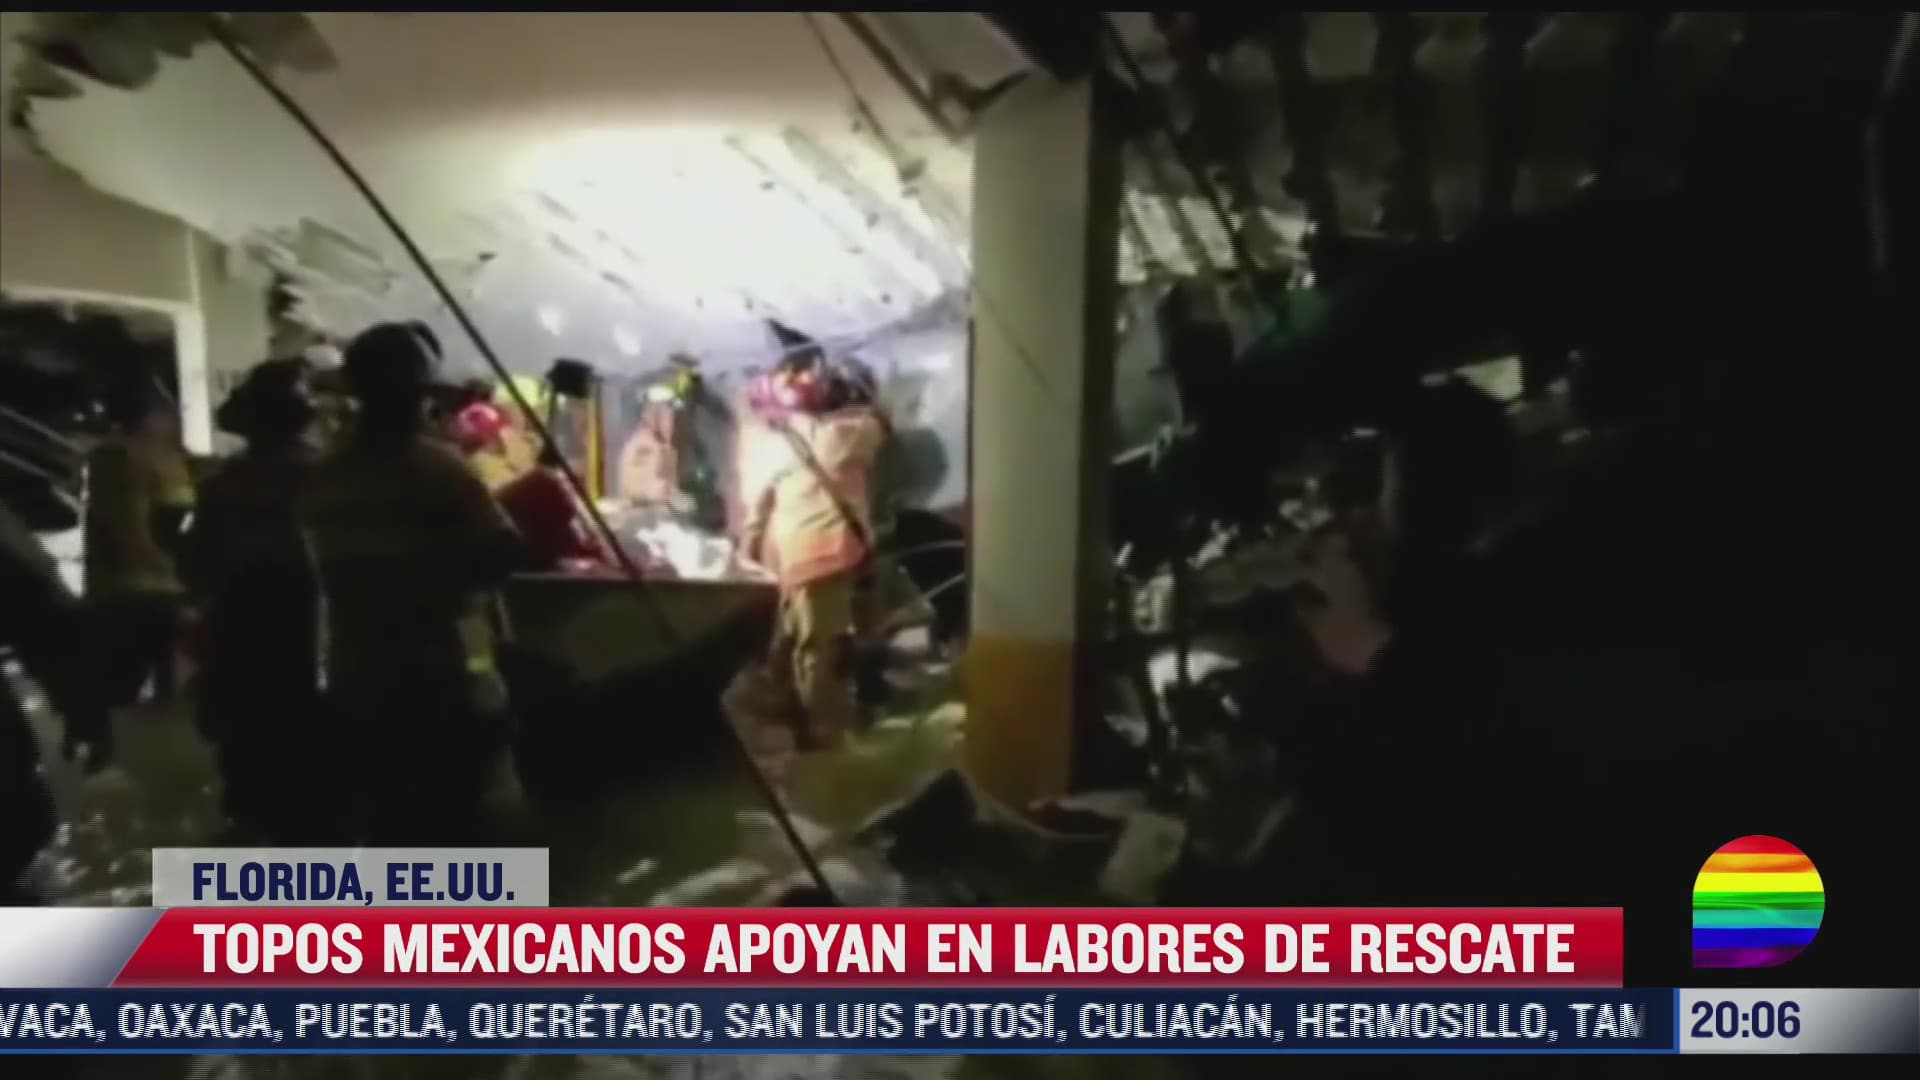 topos mexicanos apoyan labores de rescate en florida